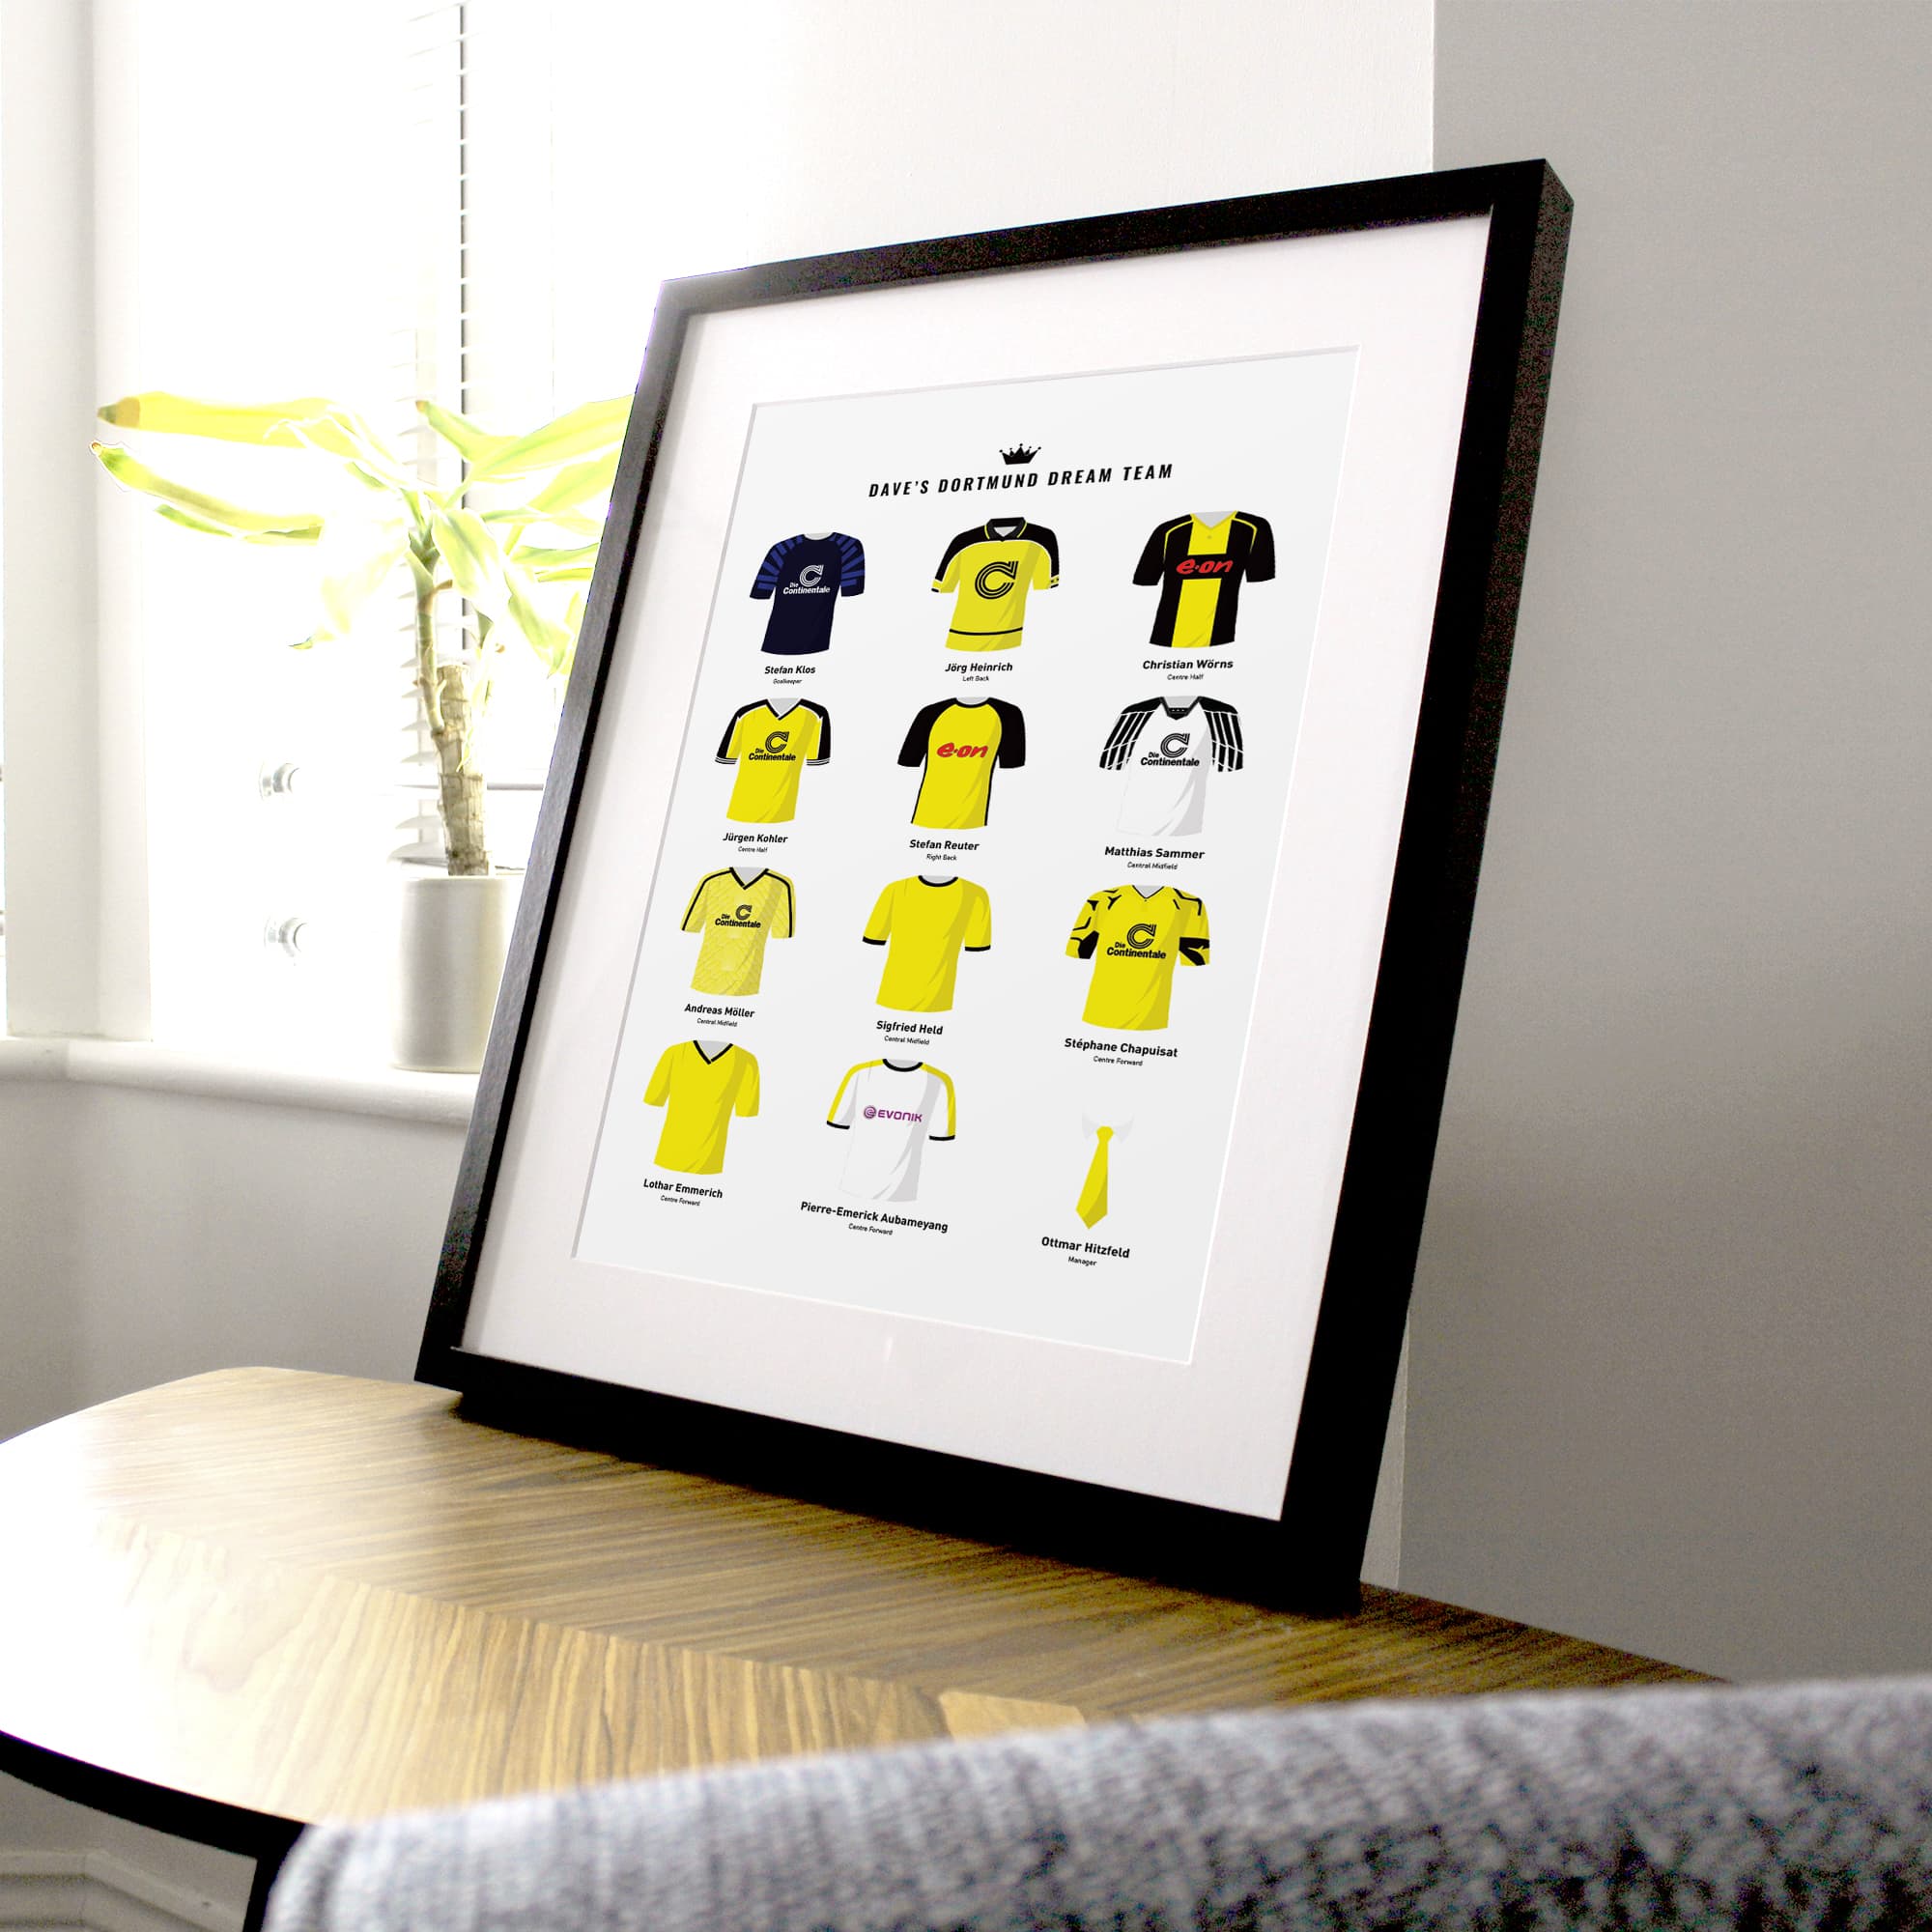 PERSONALISED Dortmund Dream Team Football Print Good Team On Paper